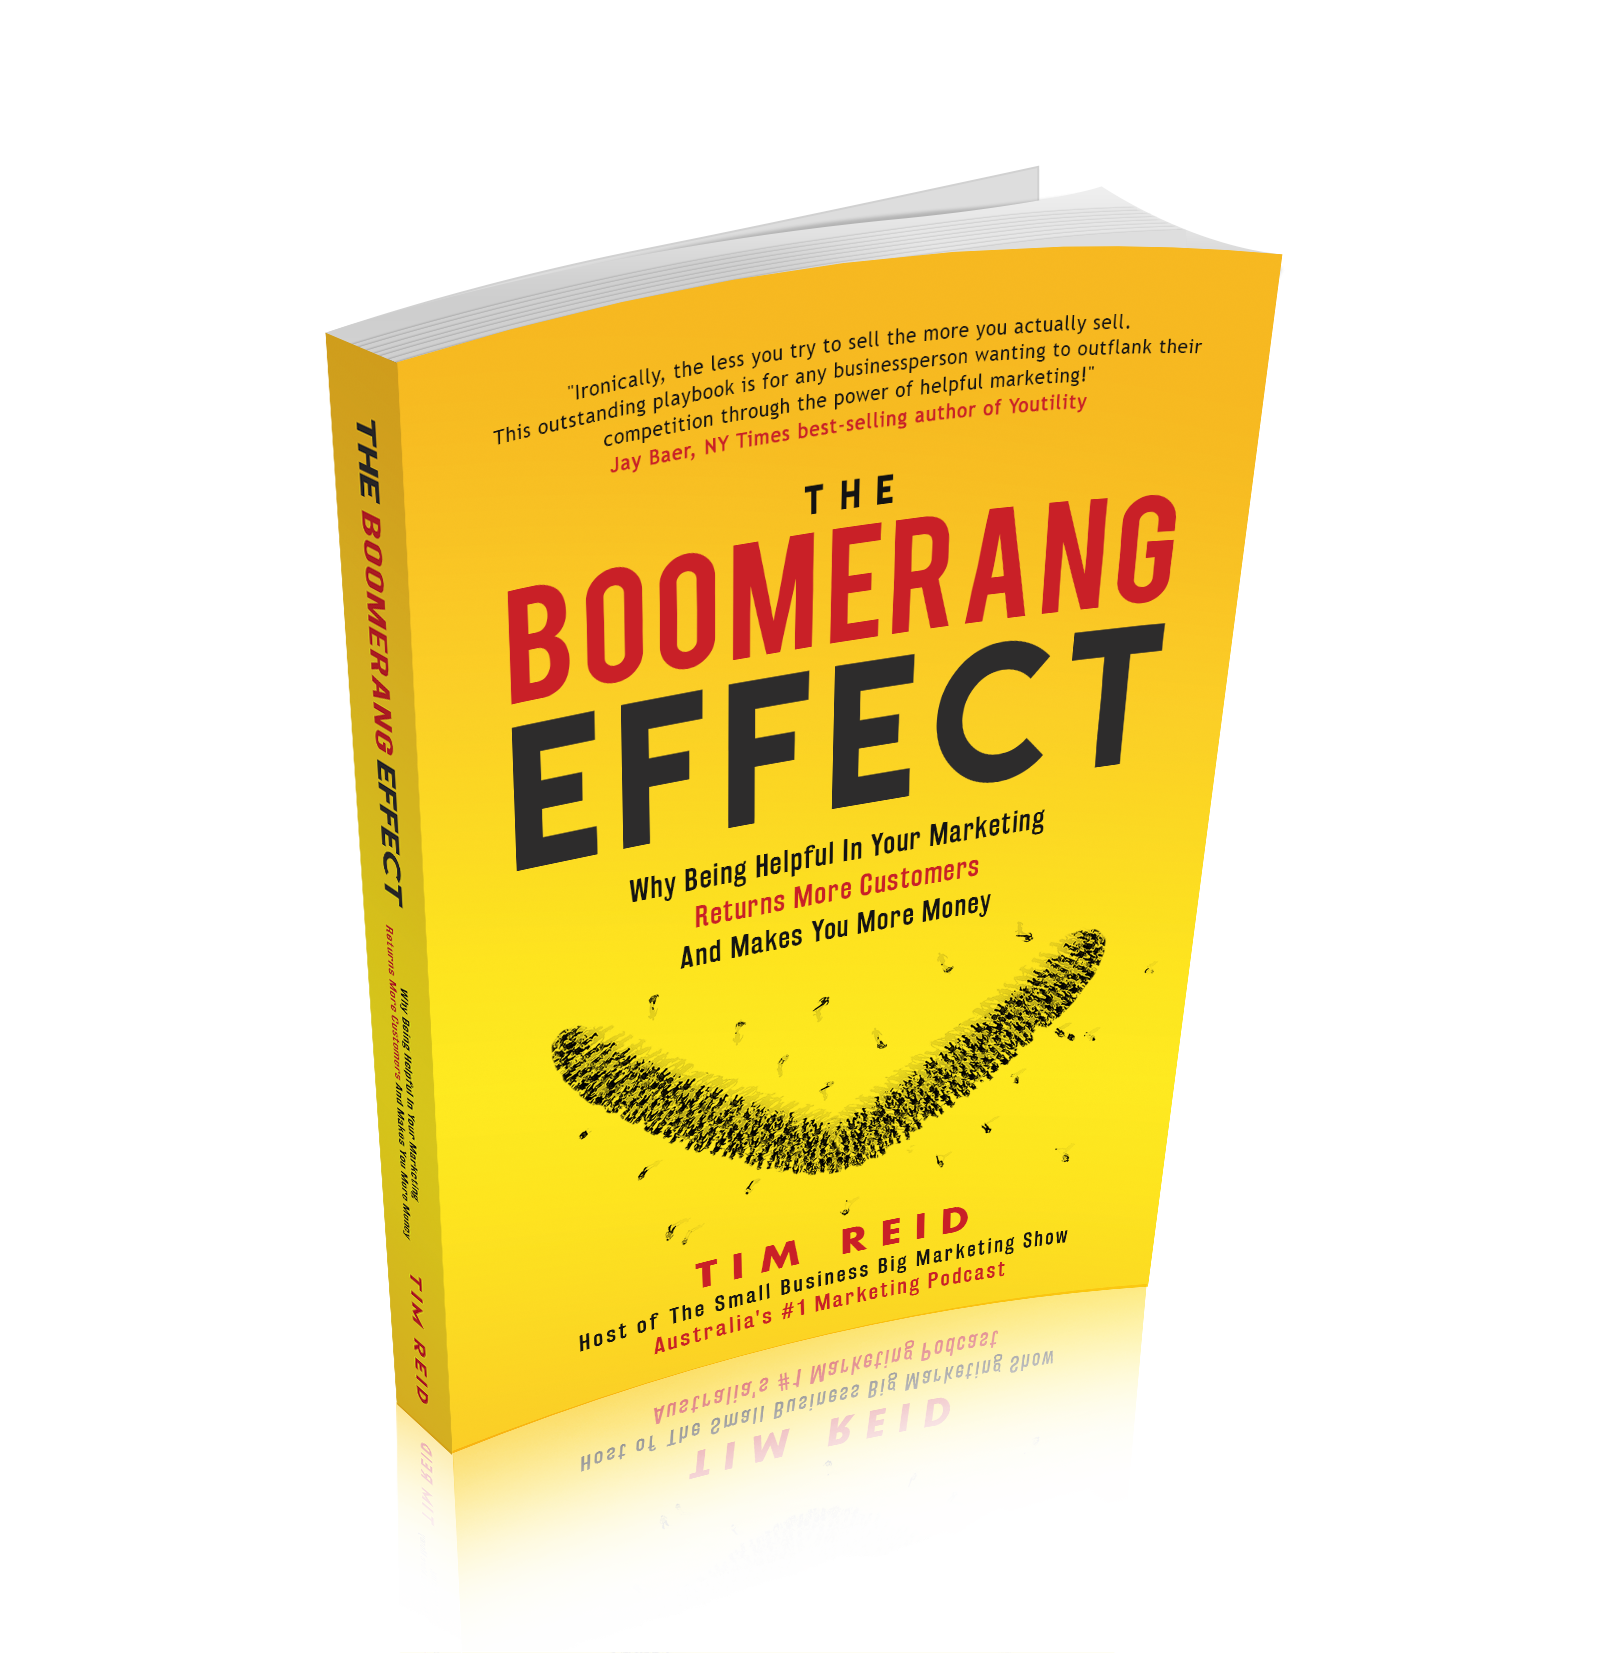 The Boomerang Effect